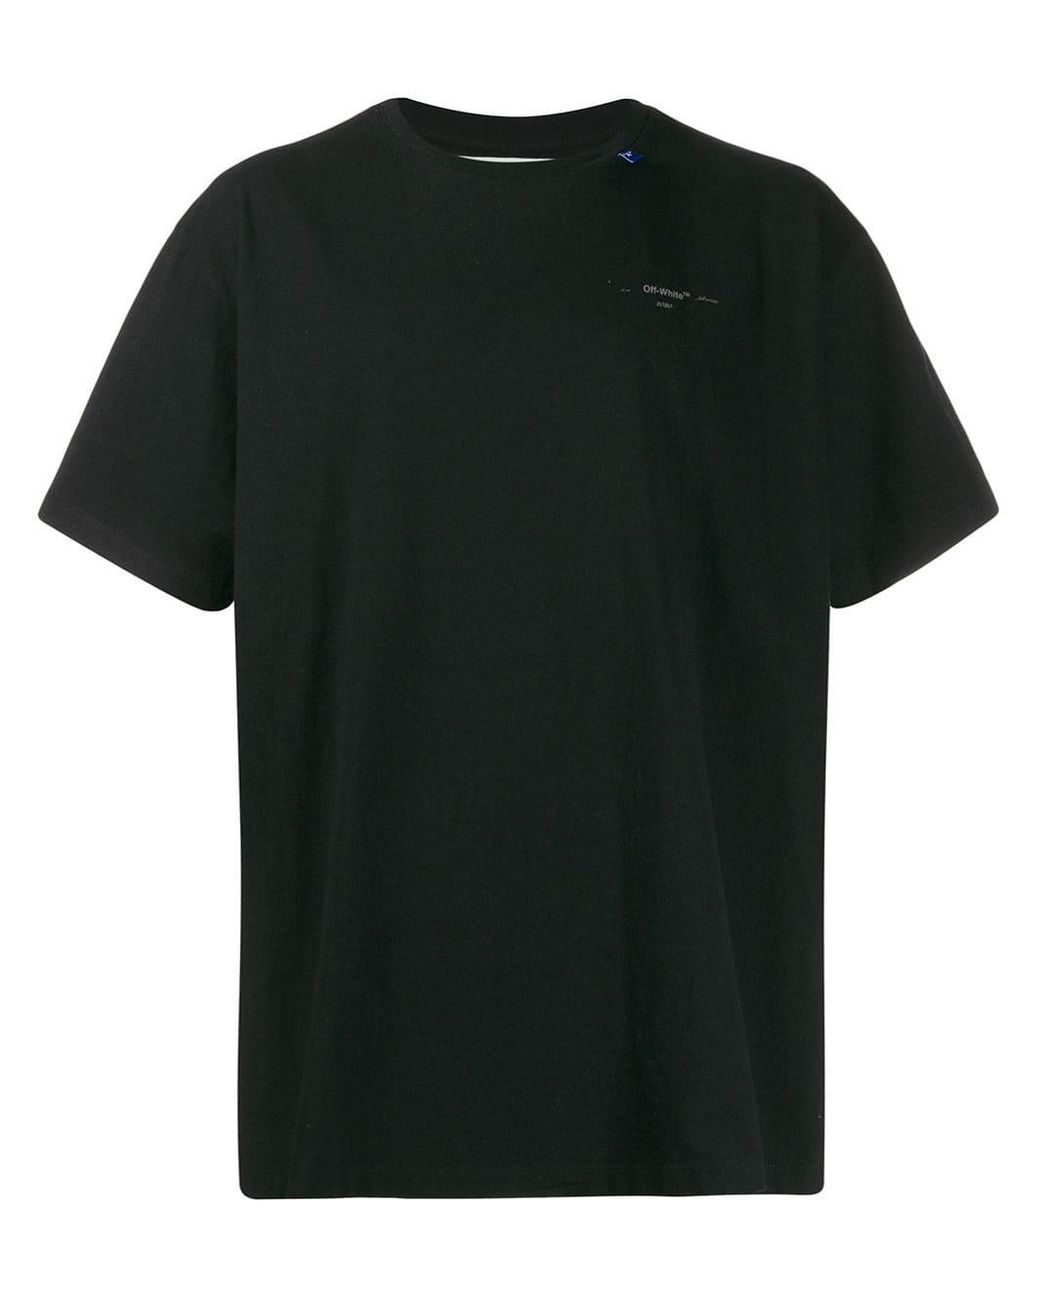 Pre Loved - Off White Black Logo T Shirt Size Medium product